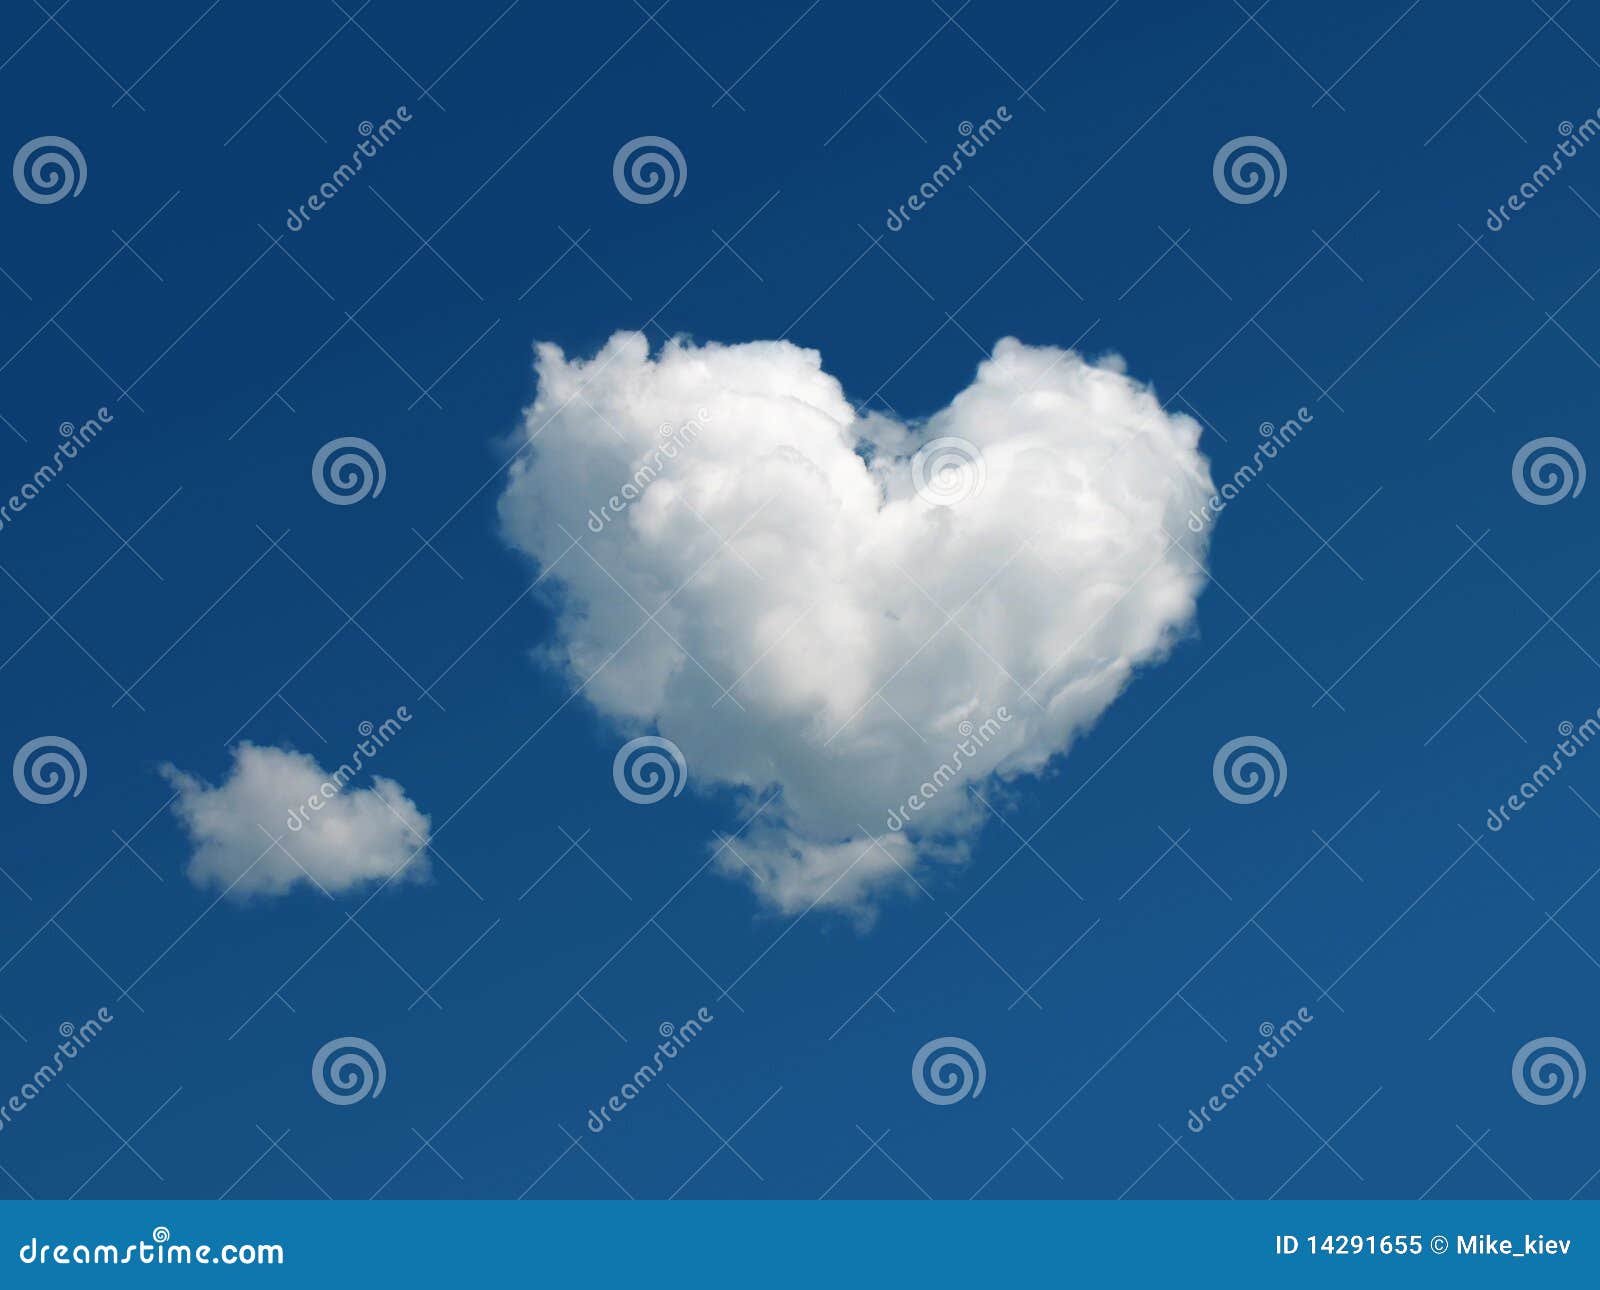 heart d cloud in the sky